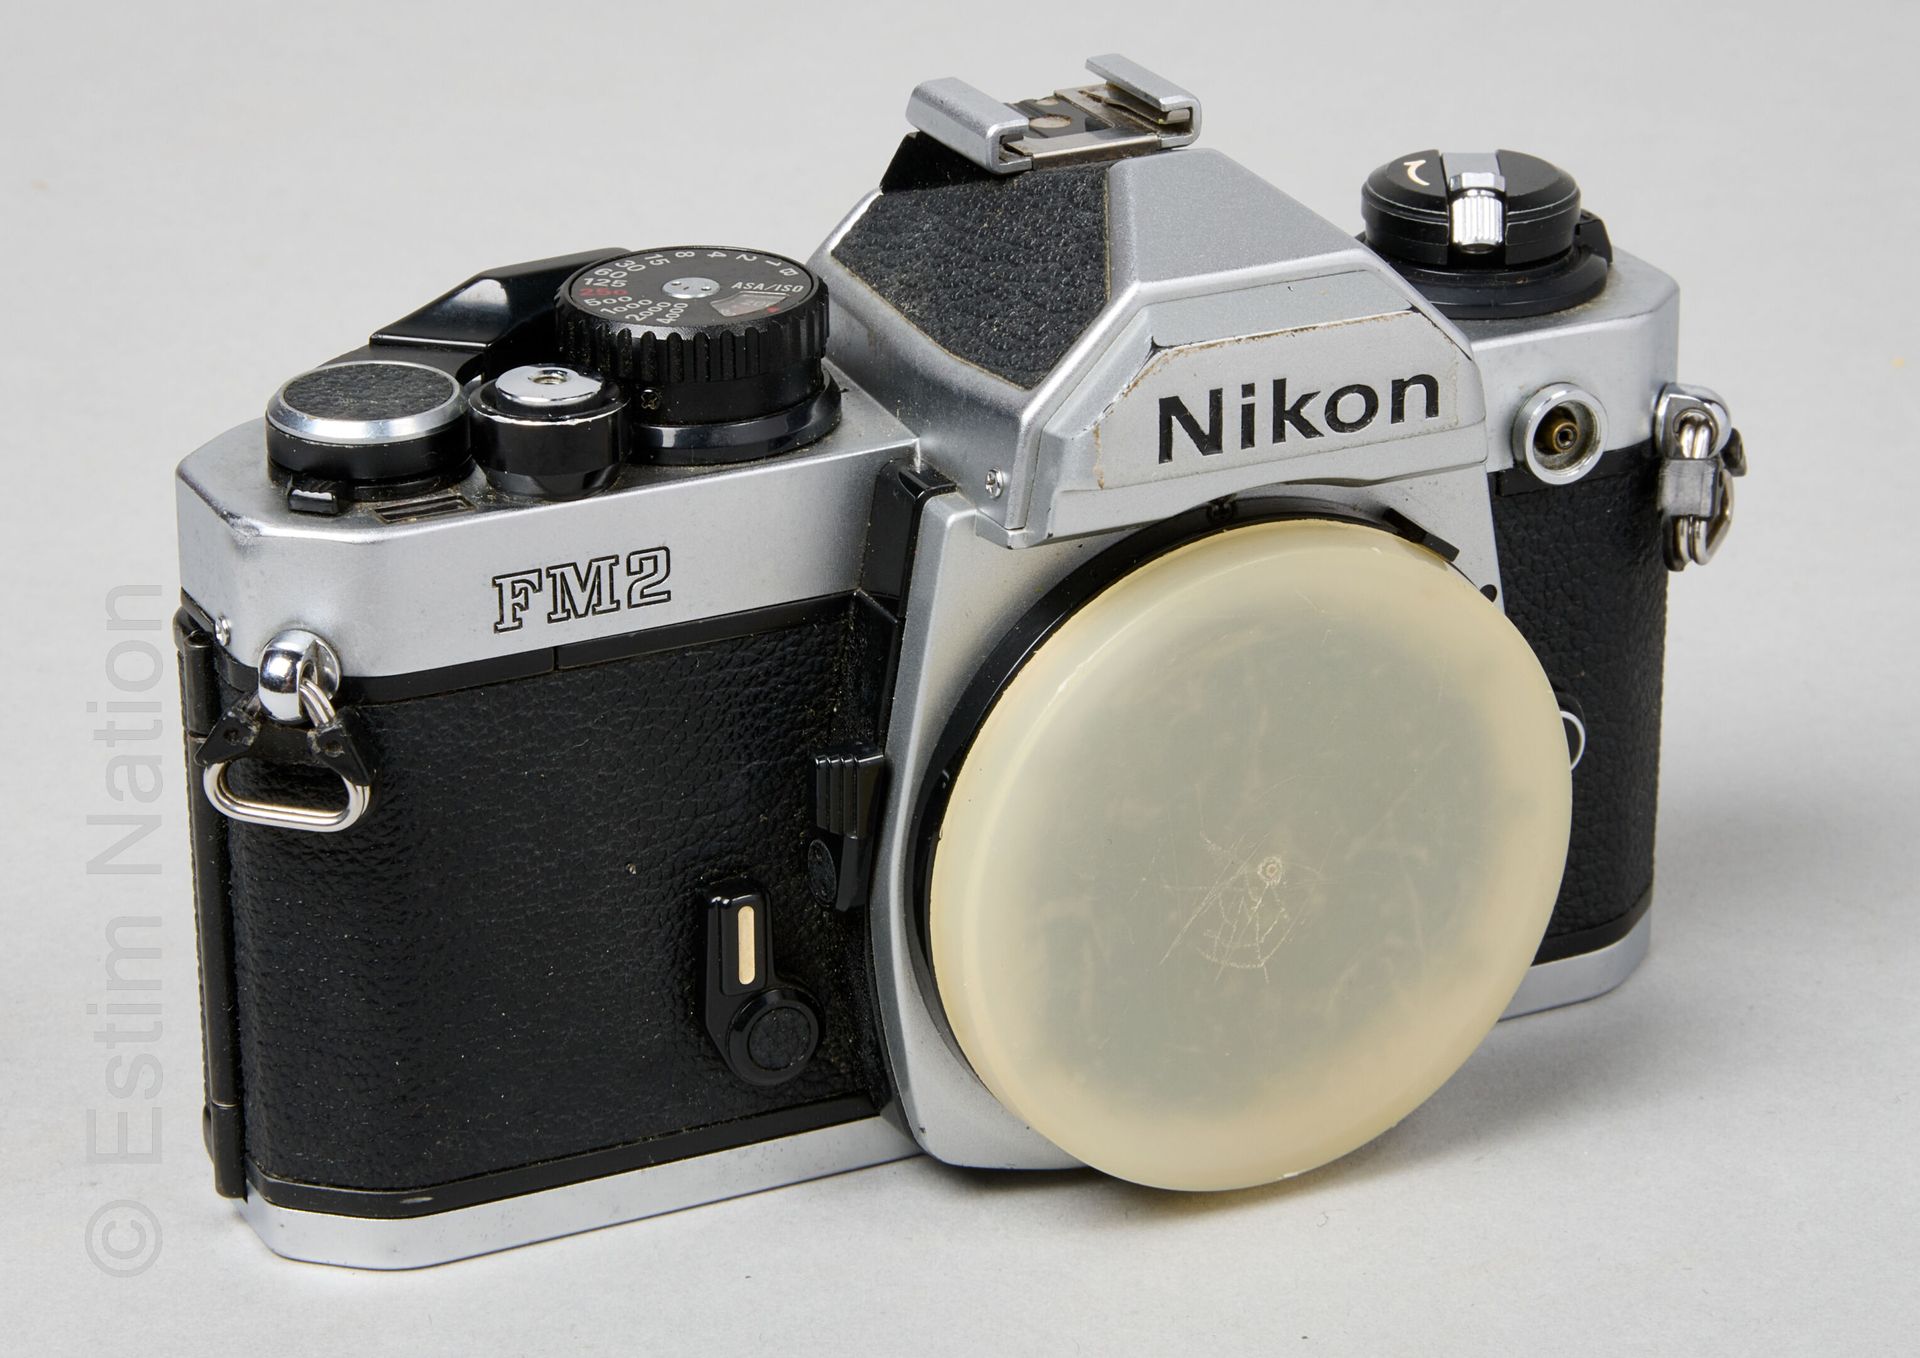 APPAREILS PHOTOGRAPHIQUES NIKON

金属和人造革相机机身，型号FM2，序列号N 8616681
状况相当好，有些磨损。

附带： &hellip;